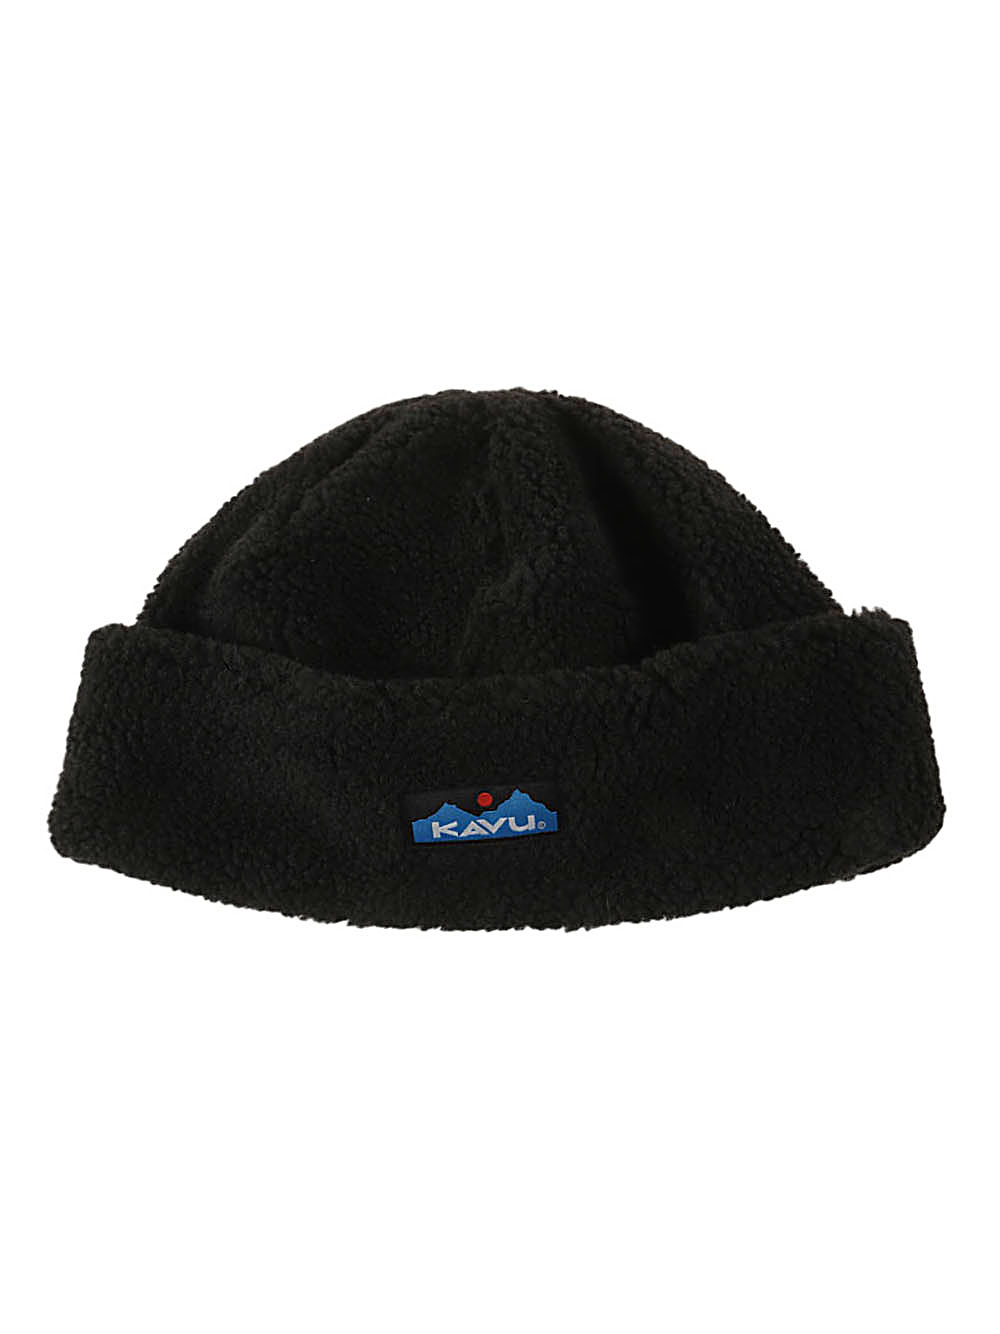 Kavu KAVU- Fur Ball Beanie Hat